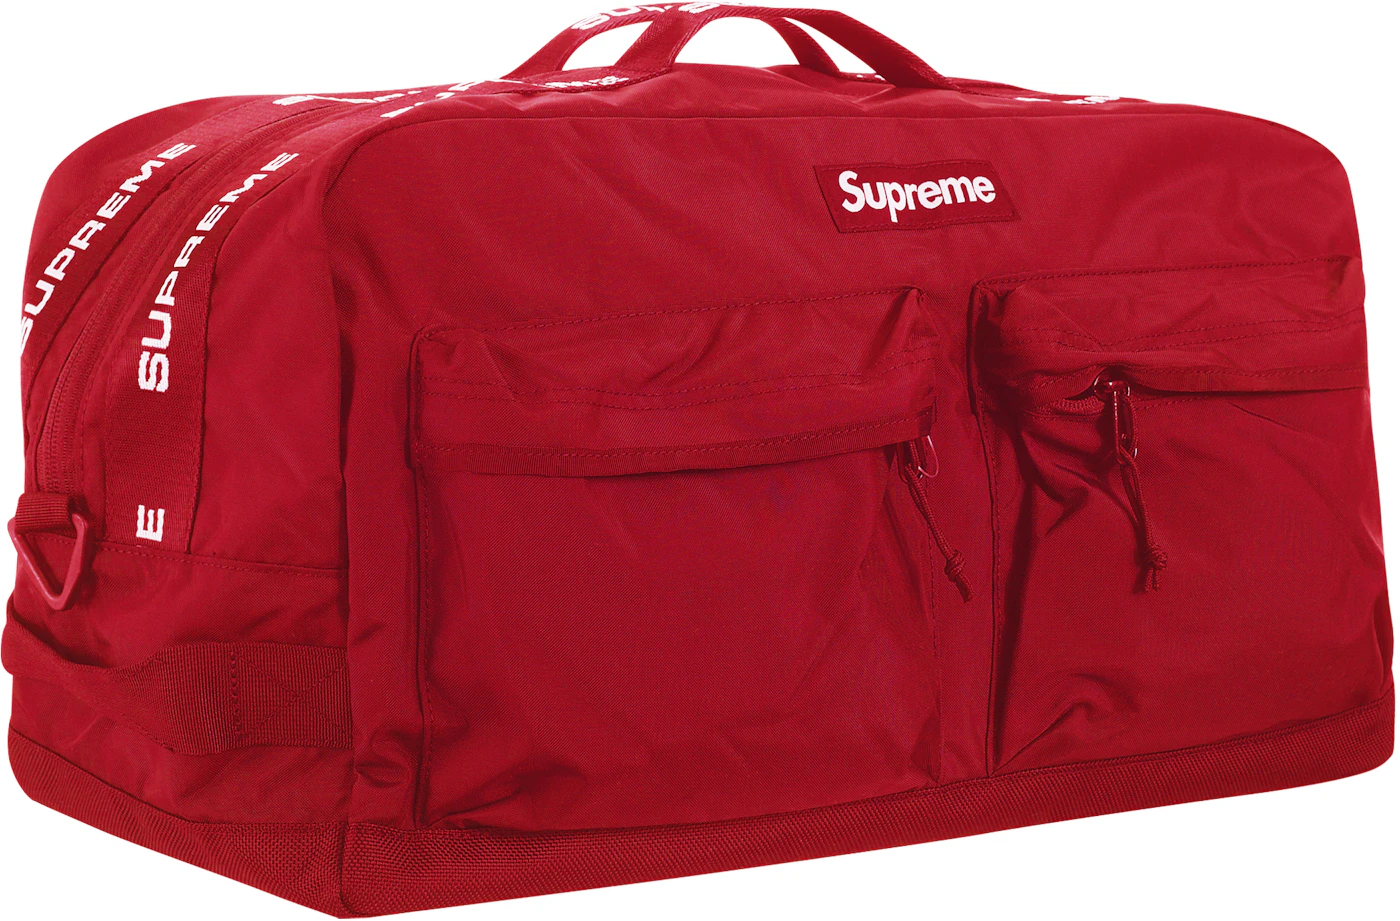 Supreme Duffle Bag Red Order Confirmed